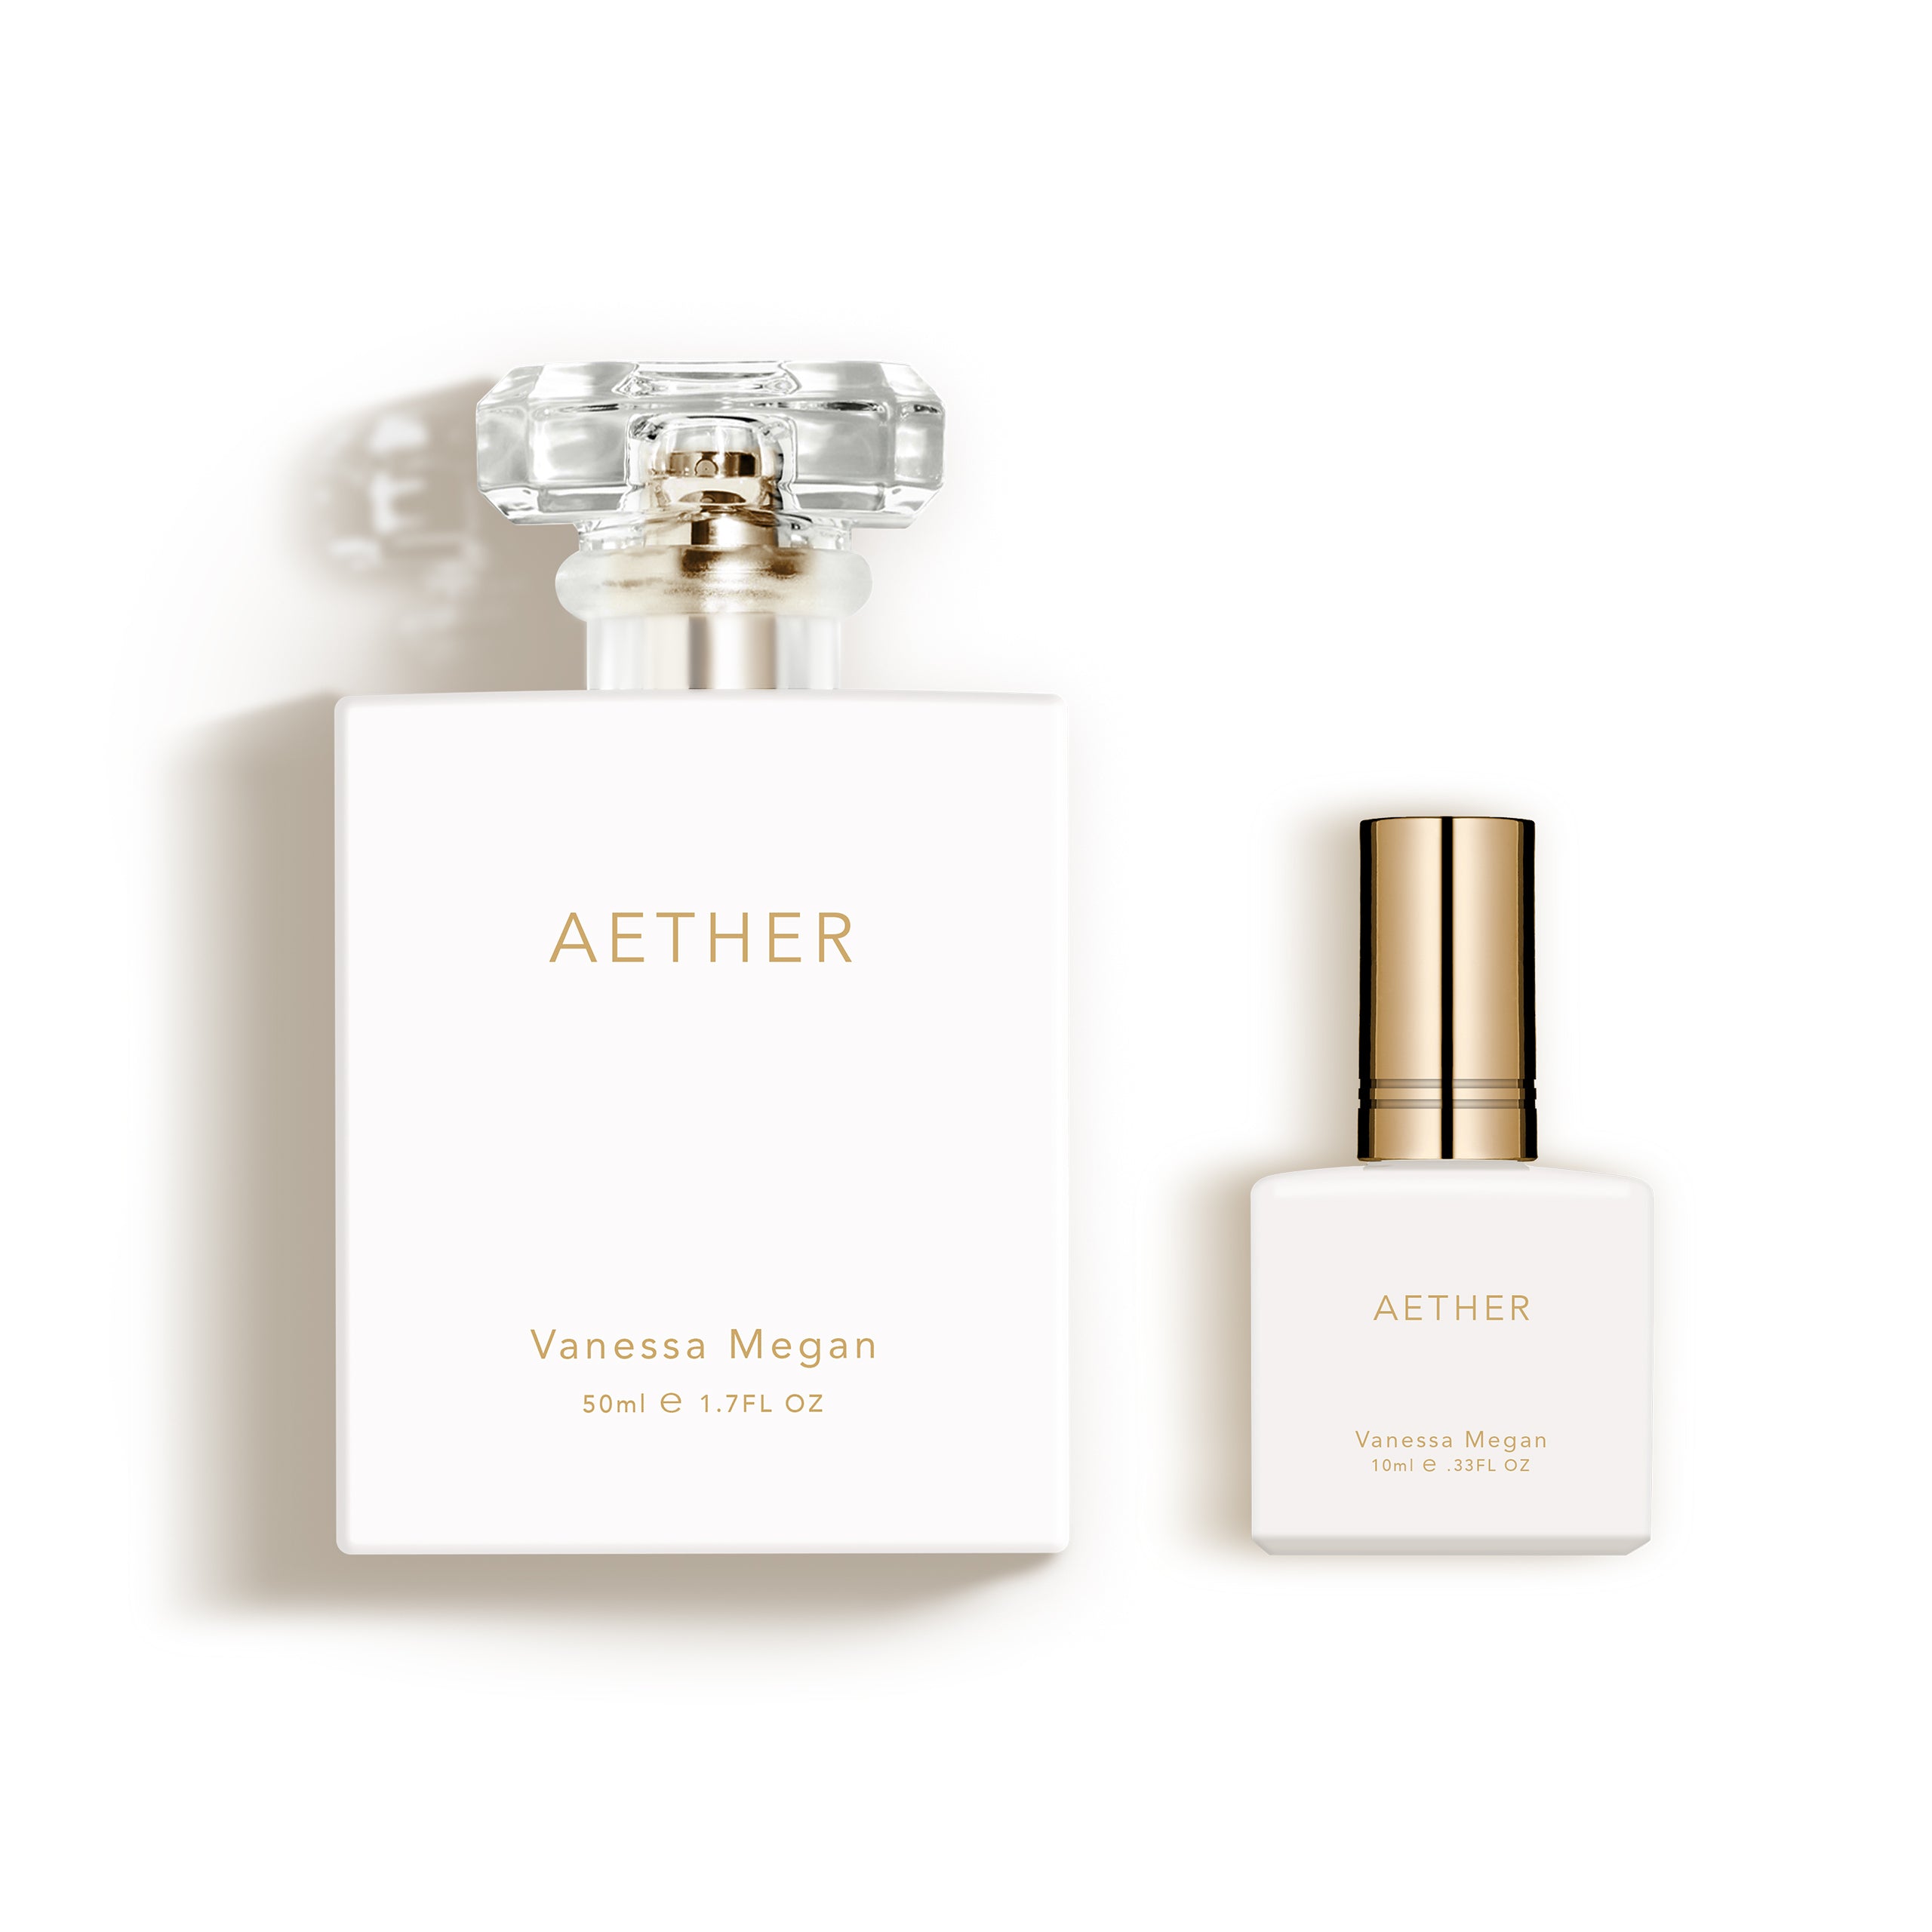 Aether | 100% Natural Mood Enhancing Perfume | Duo